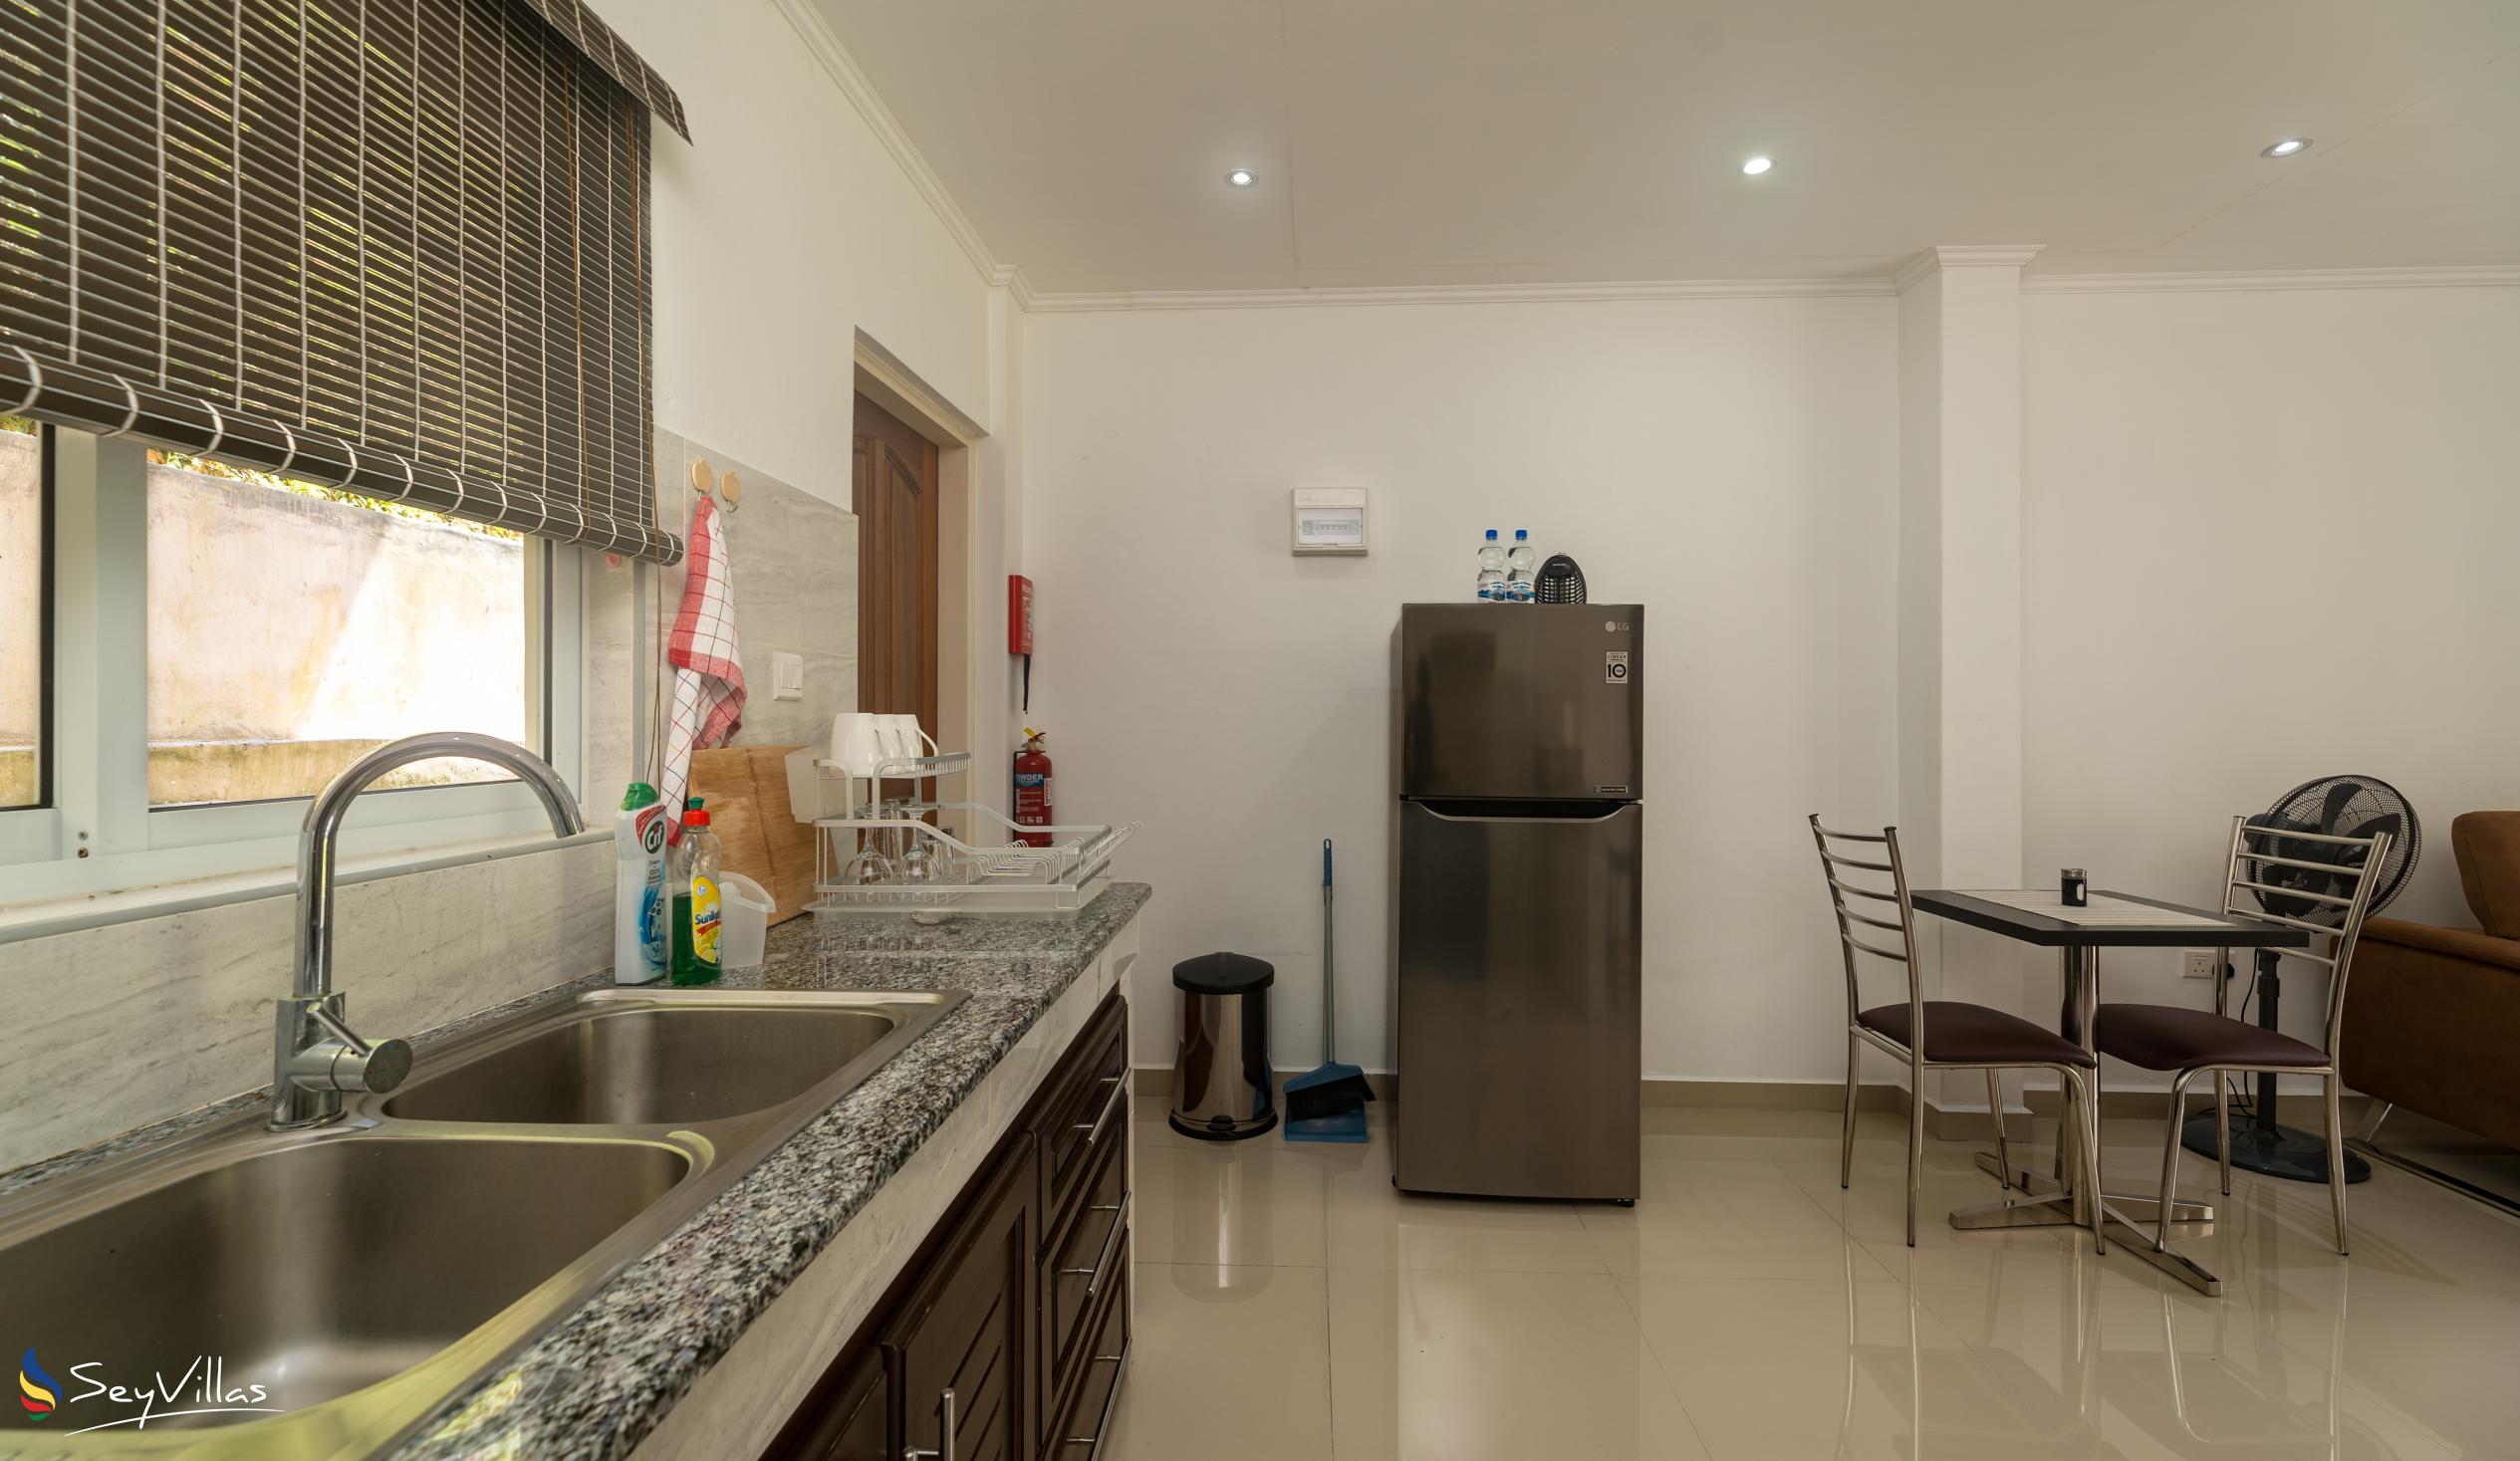 Foto 35: Paul's Residence - Appartamento con 1 camera - Mahé (Seychelles)